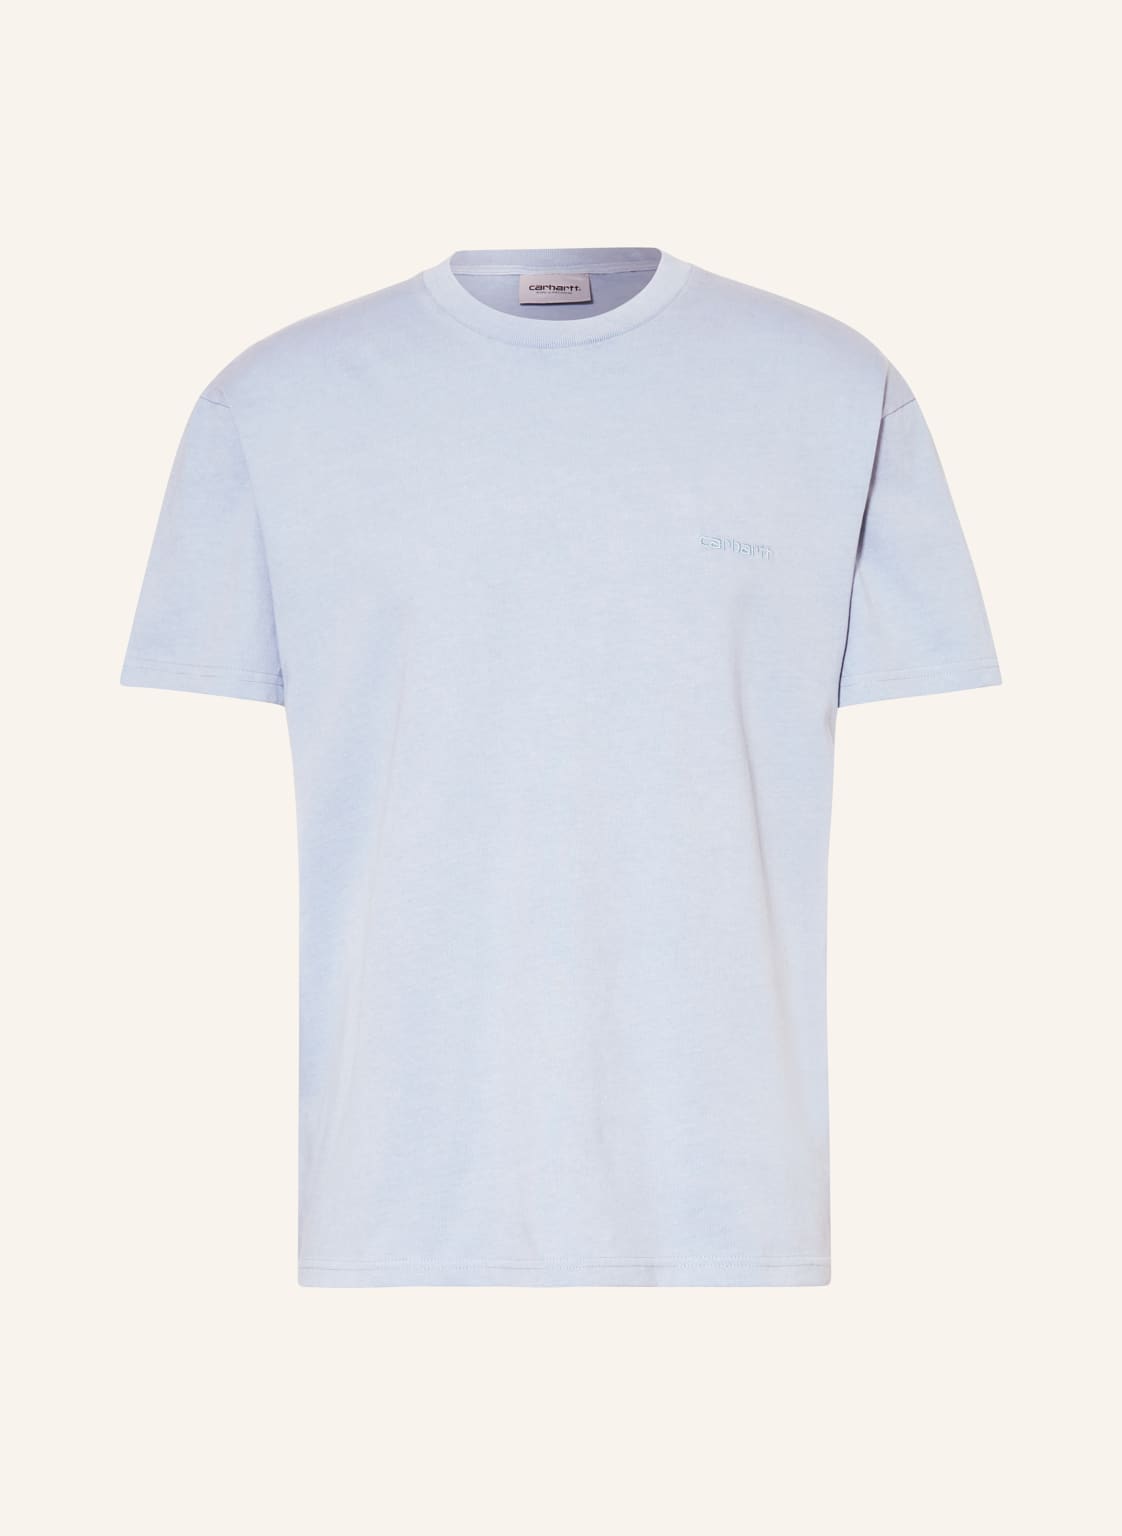 Carhartt Wip T-Shirt blau von Carhartt WIP